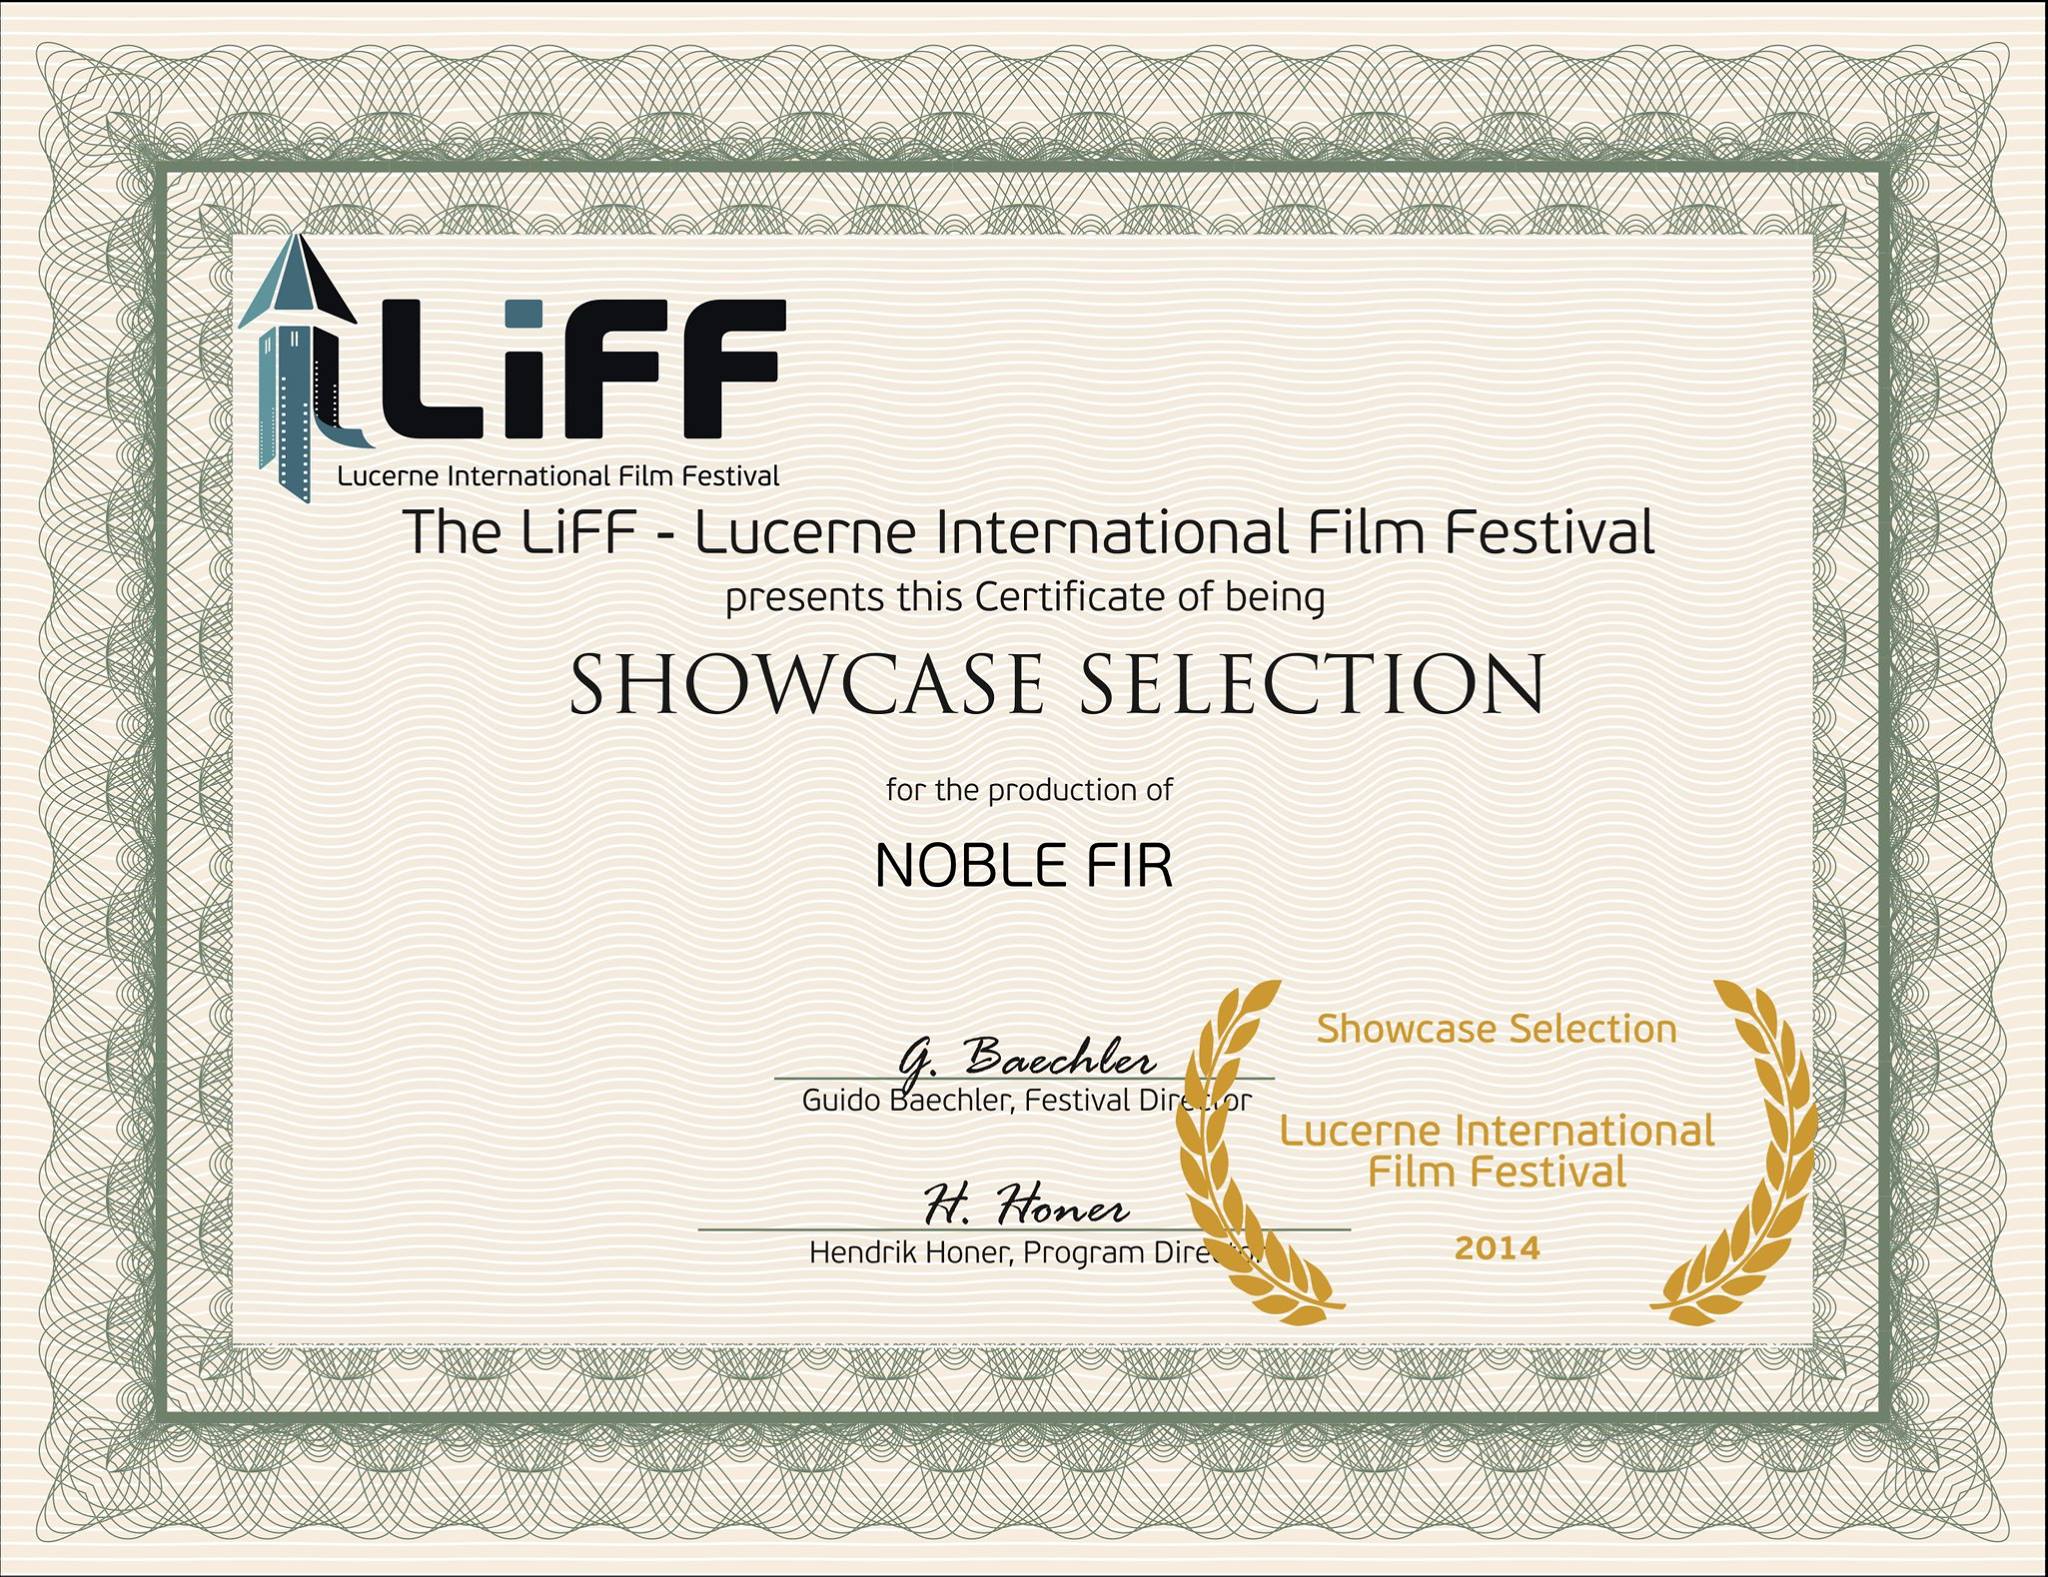 Noble Fir selected for Showcase screening at Lucerne International Film Festival in October 2014.